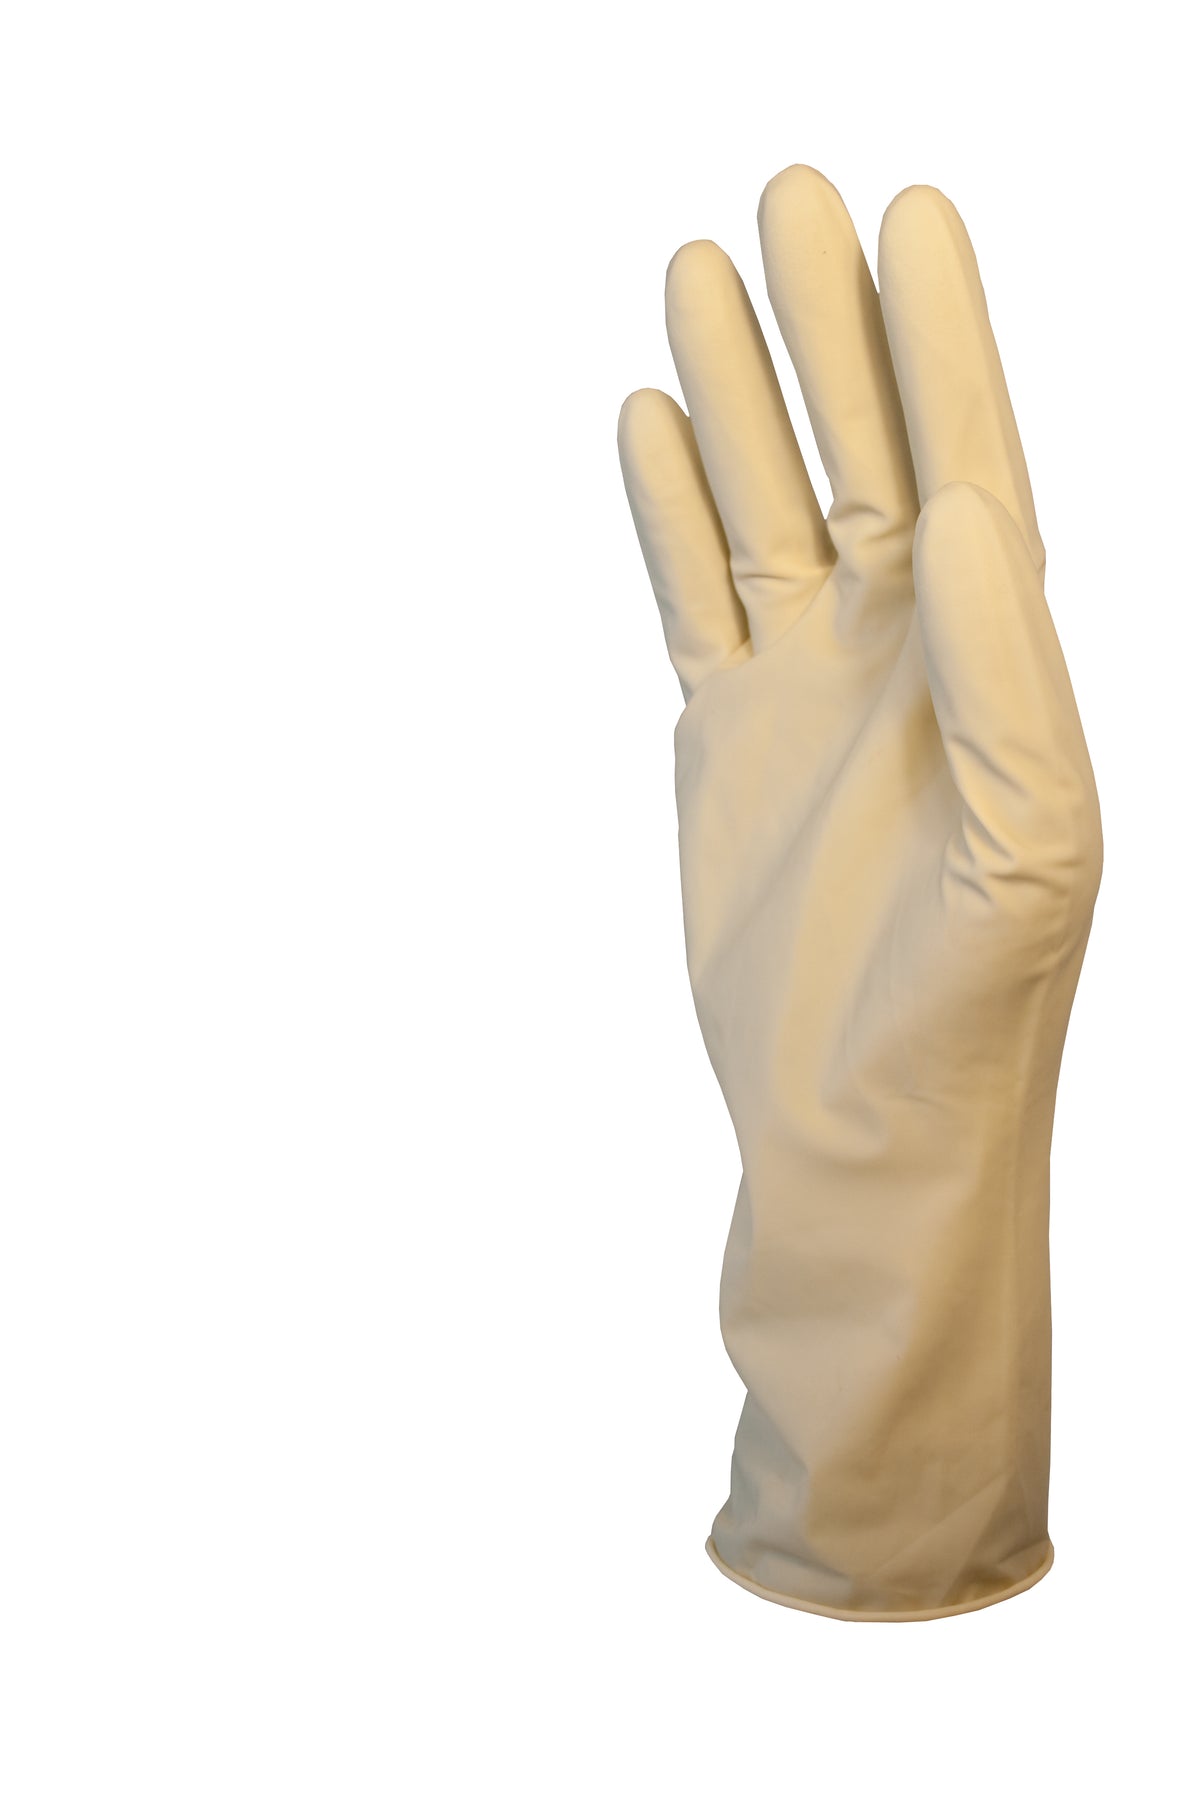 Reinraum-Handschuh Latex SIMTEC | ISO 5, natur, 300 mm